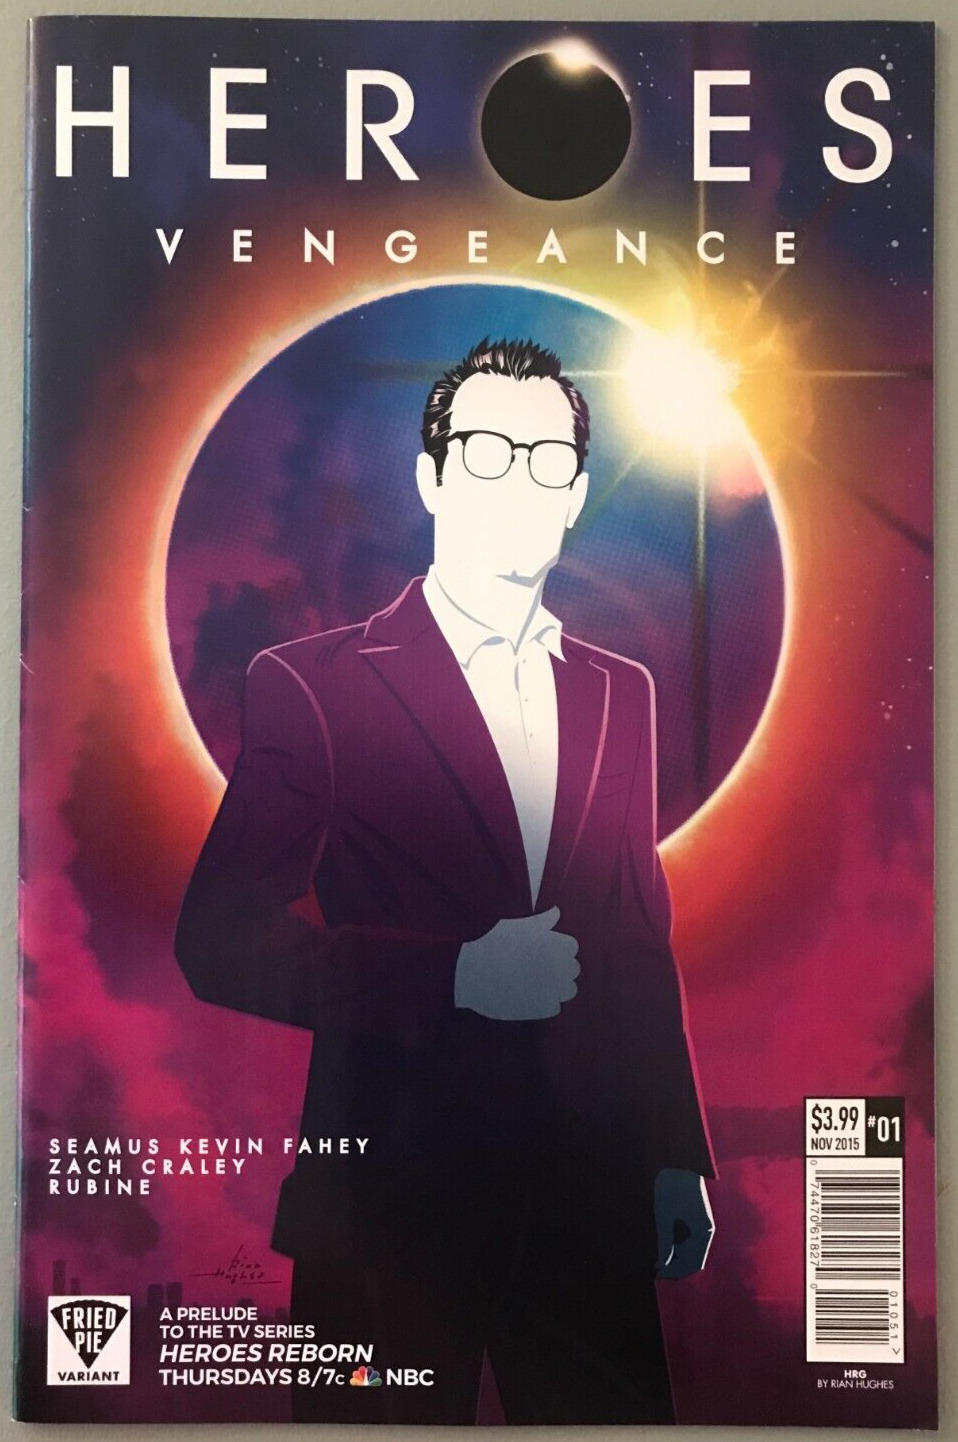 Heroes Vengeance #1 Reborn Retailer Exclusive Fried Pie BAM Variant Titan 2015